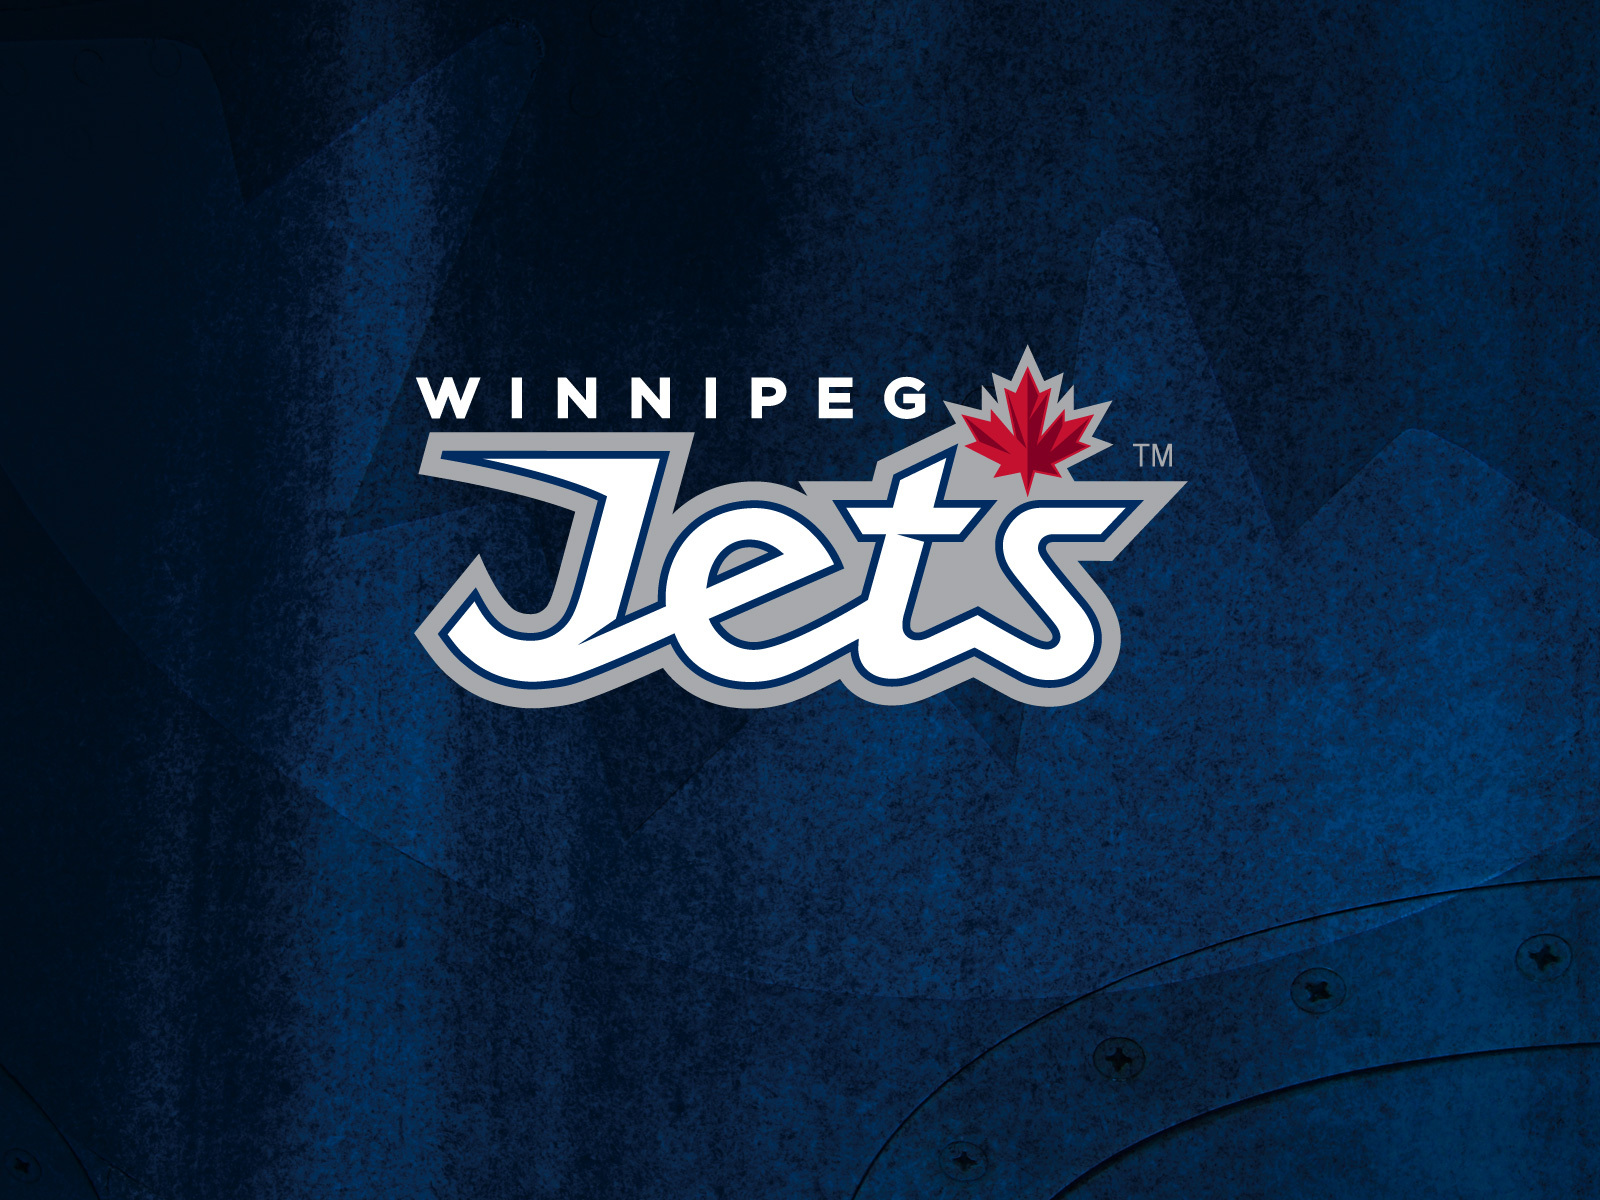 Winnipeg Jets Wallpaper Full HD Pictures